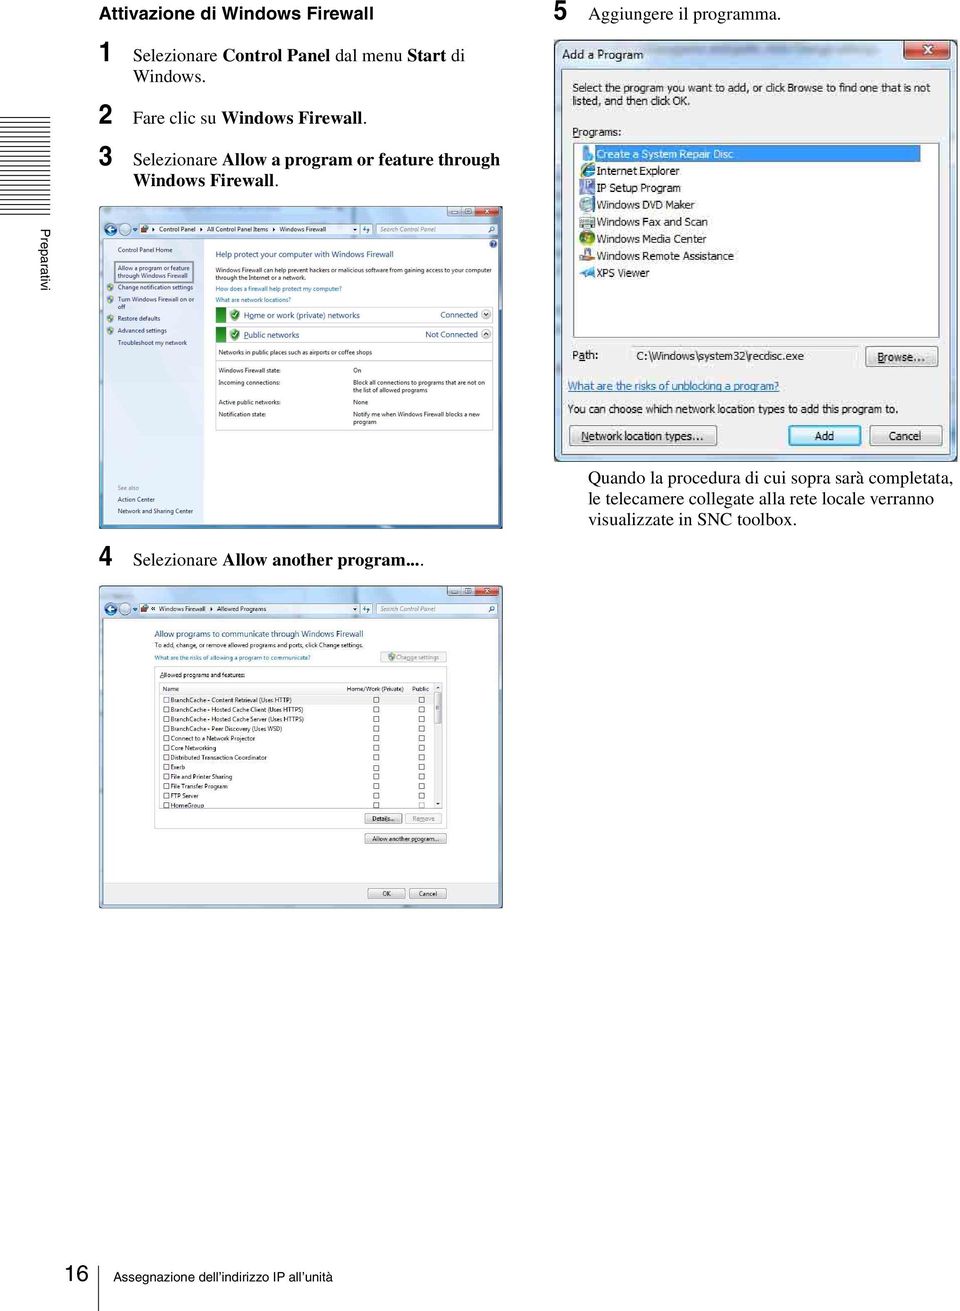 3 Selezionare Allow a program or feature through Windows Firewall.